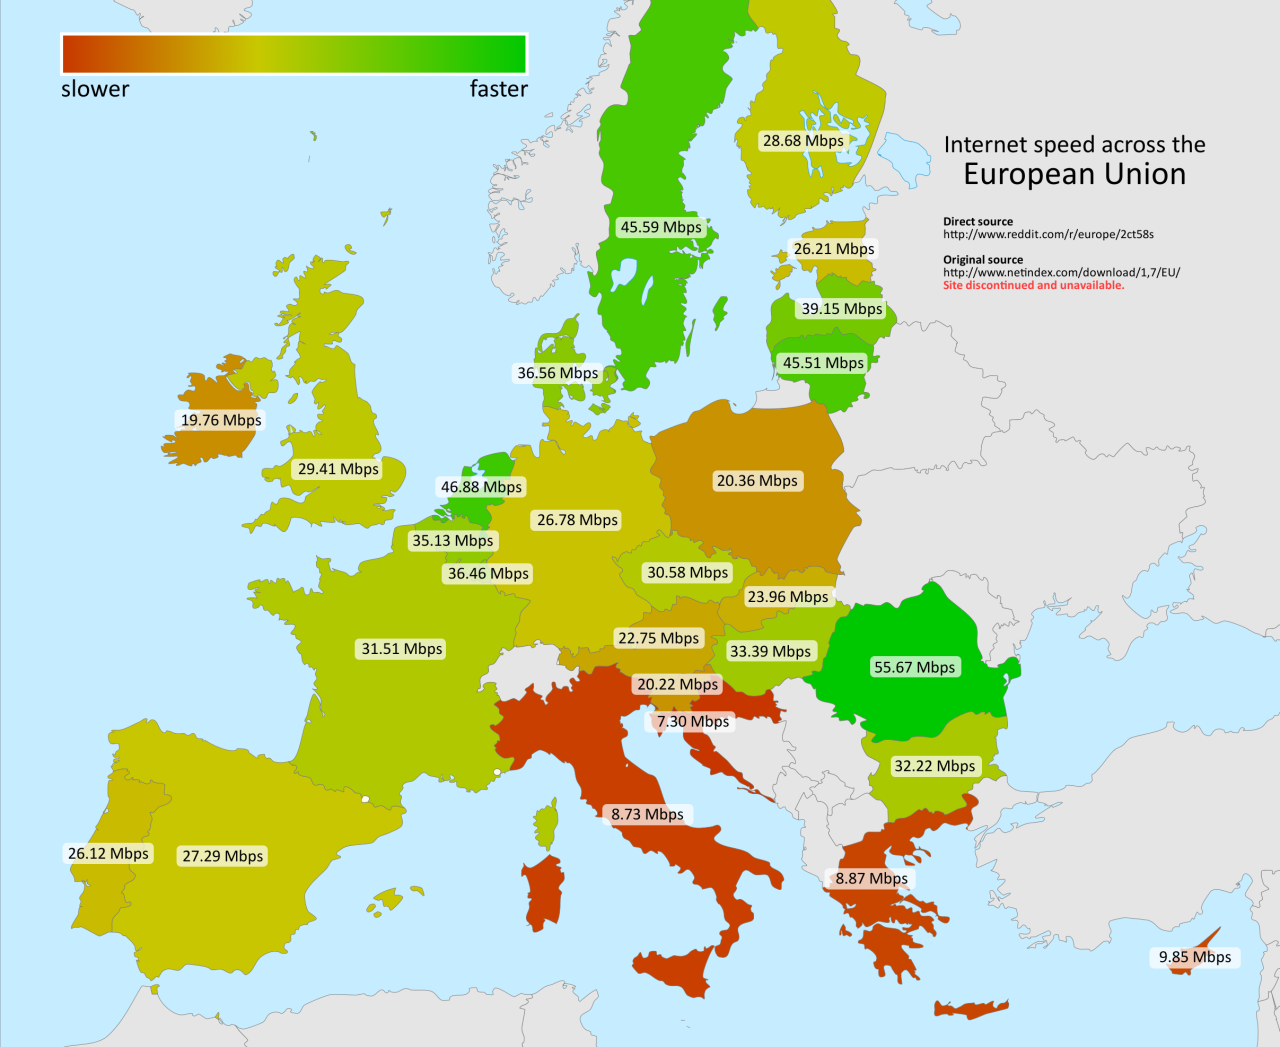 mapsontheweb:
“ Internet speed across the European Union.
More internet maps >>
”